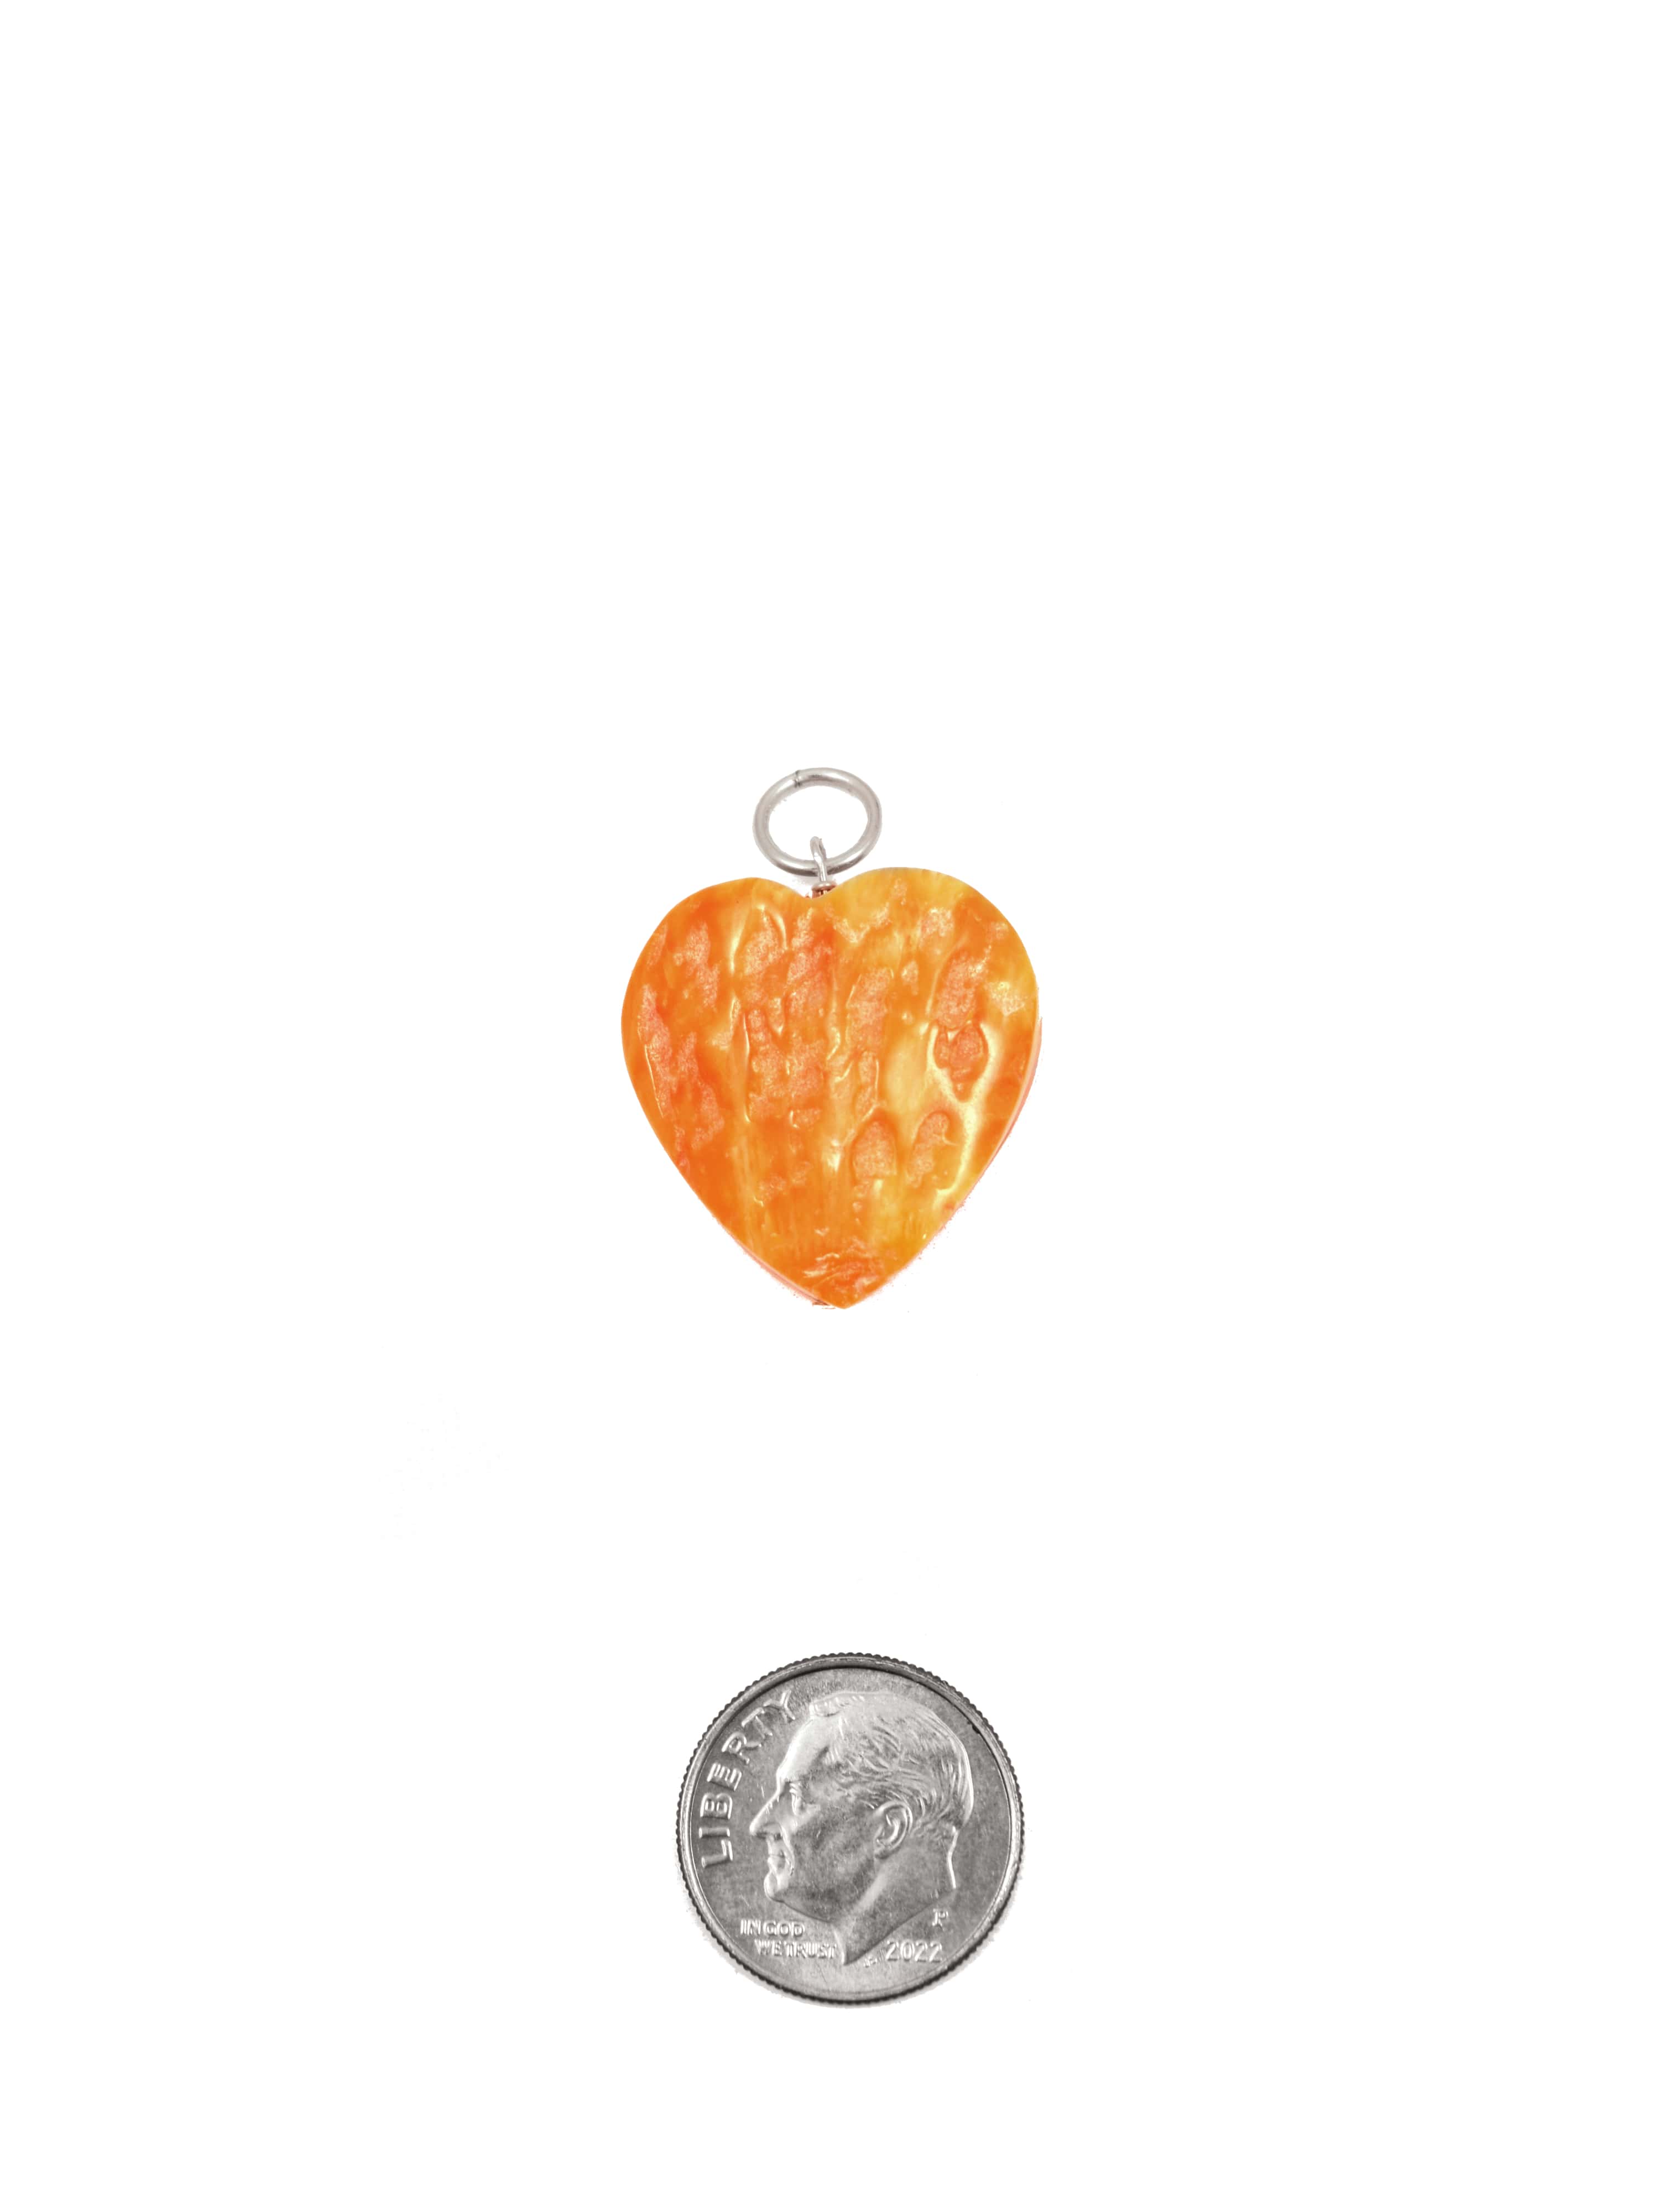 Carved Orange Heart Charm